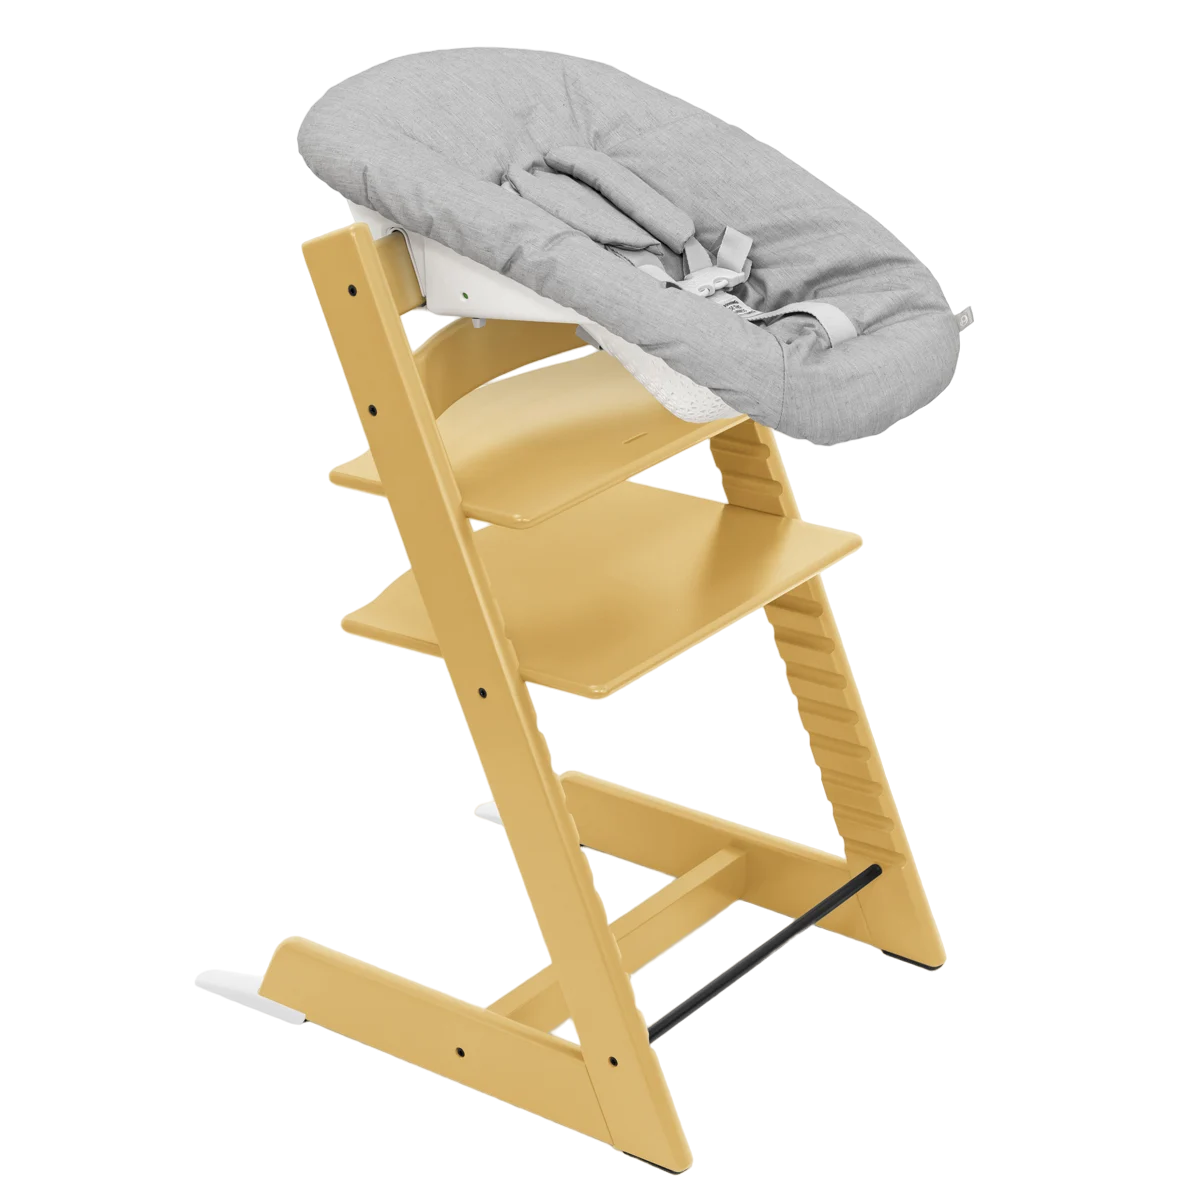 Набор Stokke Newborn Tripp Trapp Sunflower Yellow: стульчик и кресло для новорожденных (k.100137.52) - фото 1